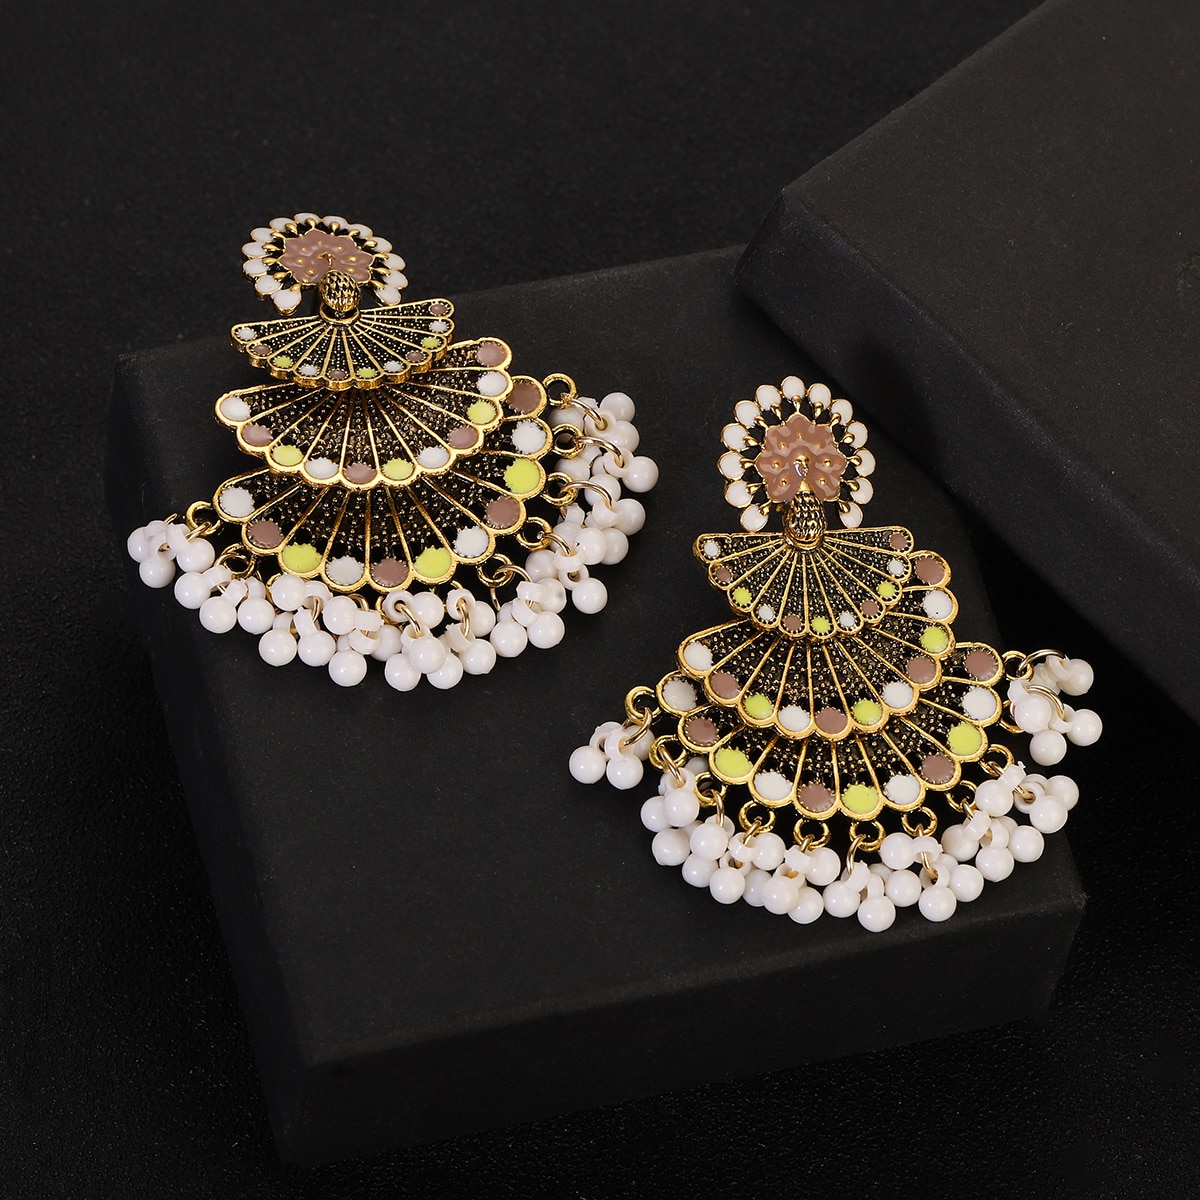 Indian-Jewellery-Red-White-Sector-Jhumka-Earrings-For-Women-Orecchini-Retro-Pearl-Beads-Tassel-Earri-1005004587102350-4